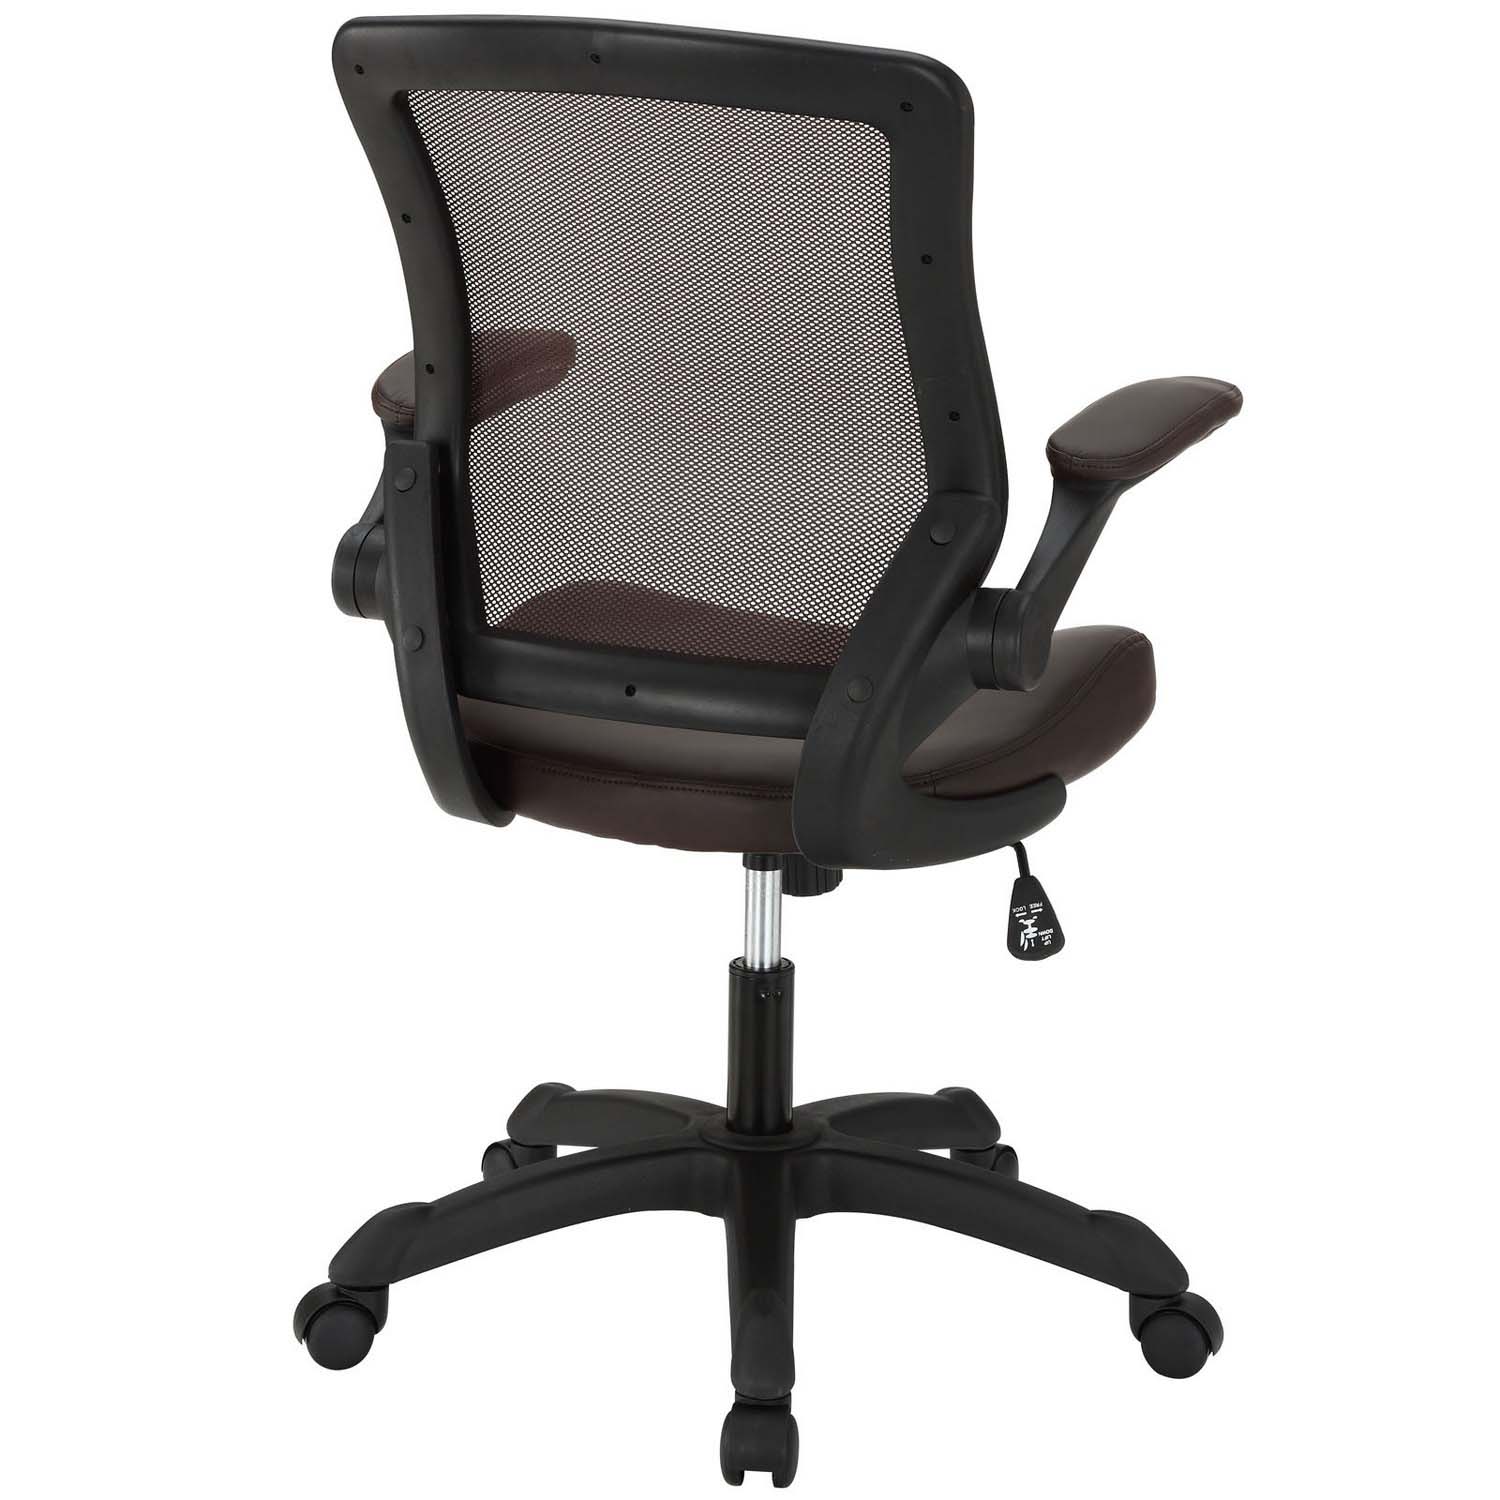 Modway Veer Vinyl Office Chair - Brown